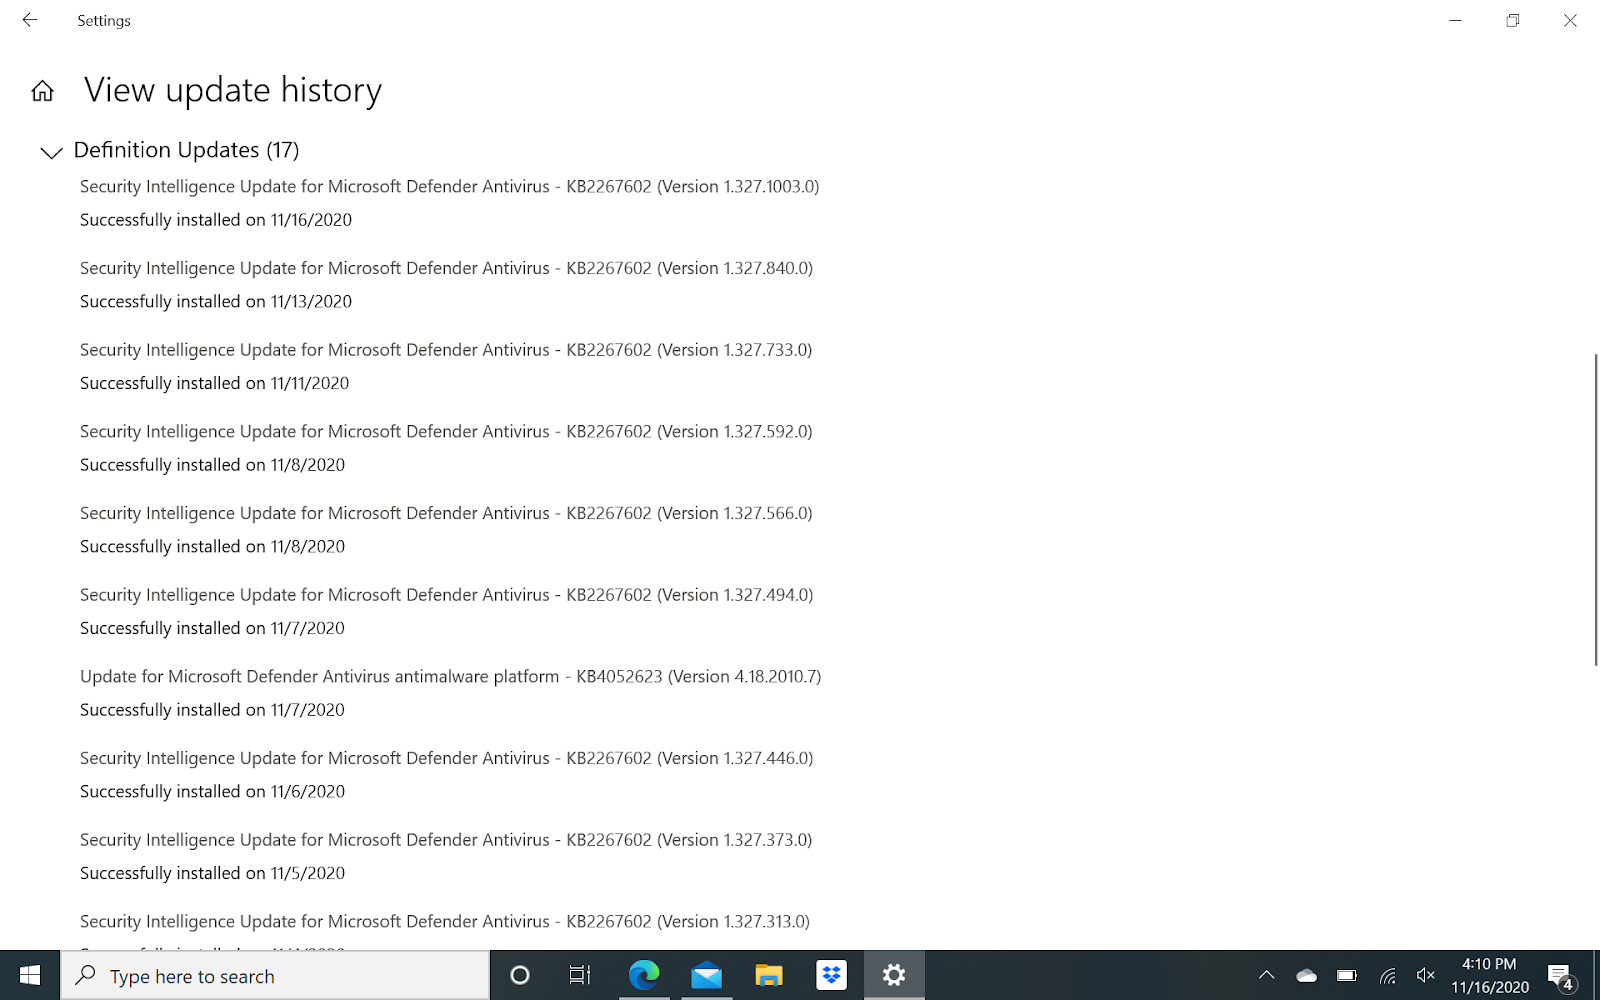 Windows 10 Home security updates jason aten